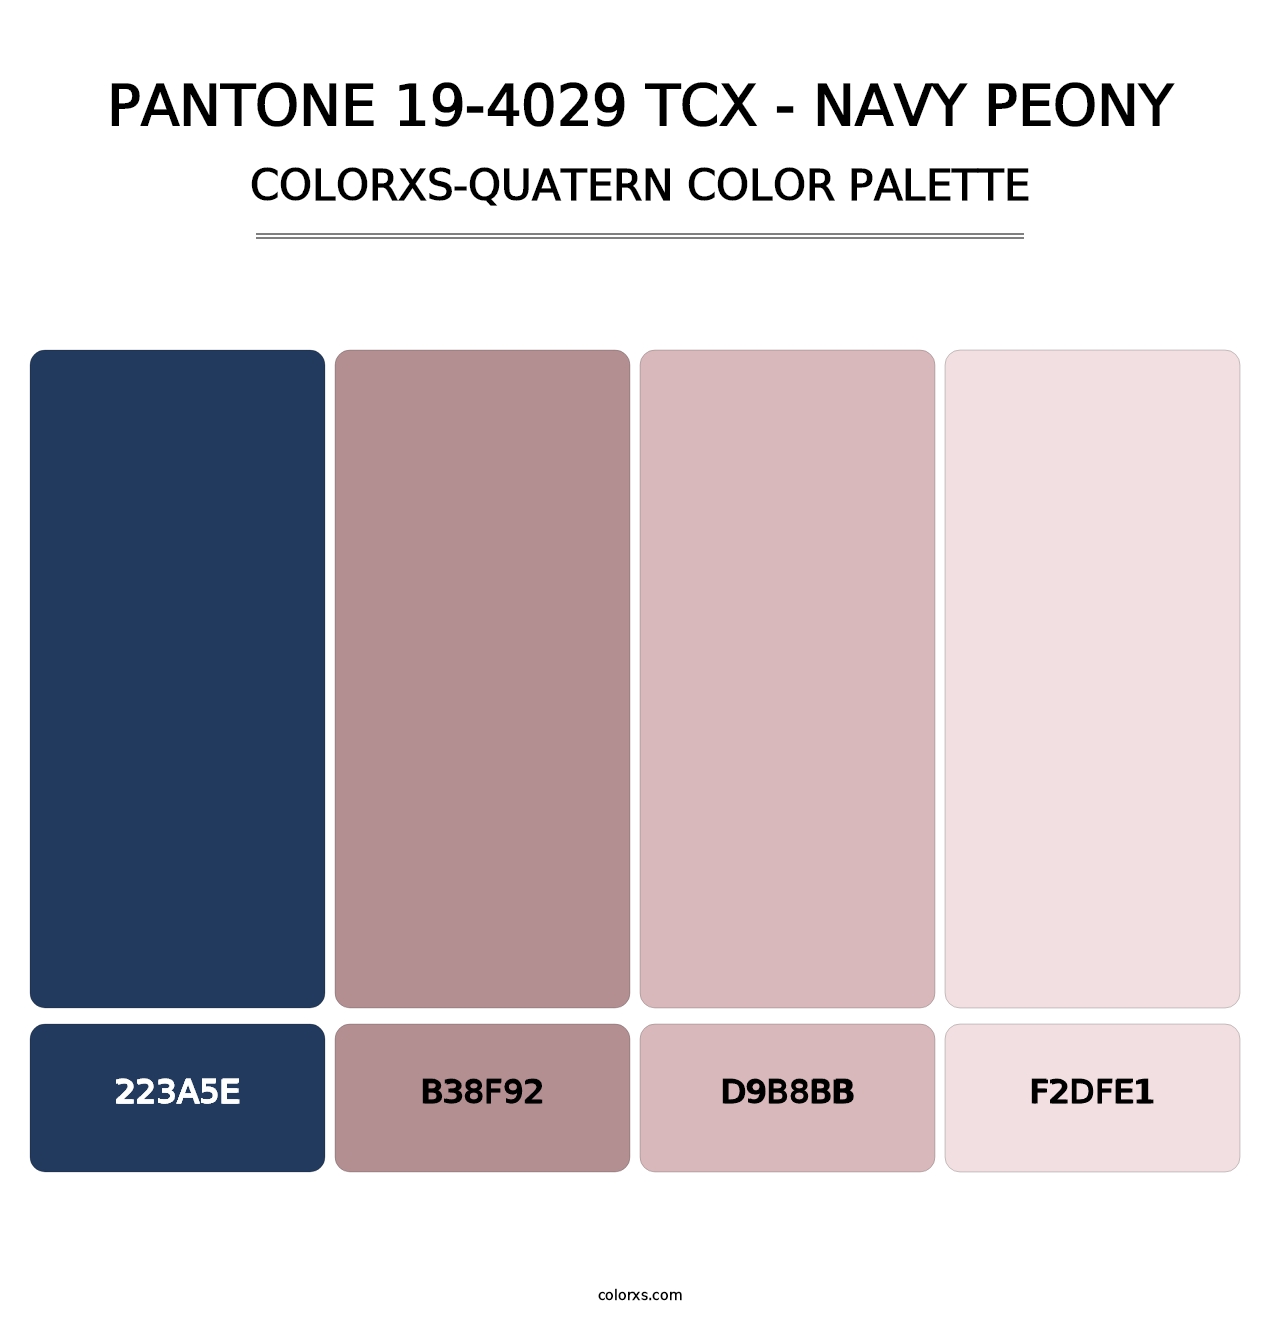 PANTONE 19-4029 TCX - Navy Peony - Colorxs Quatern Palette